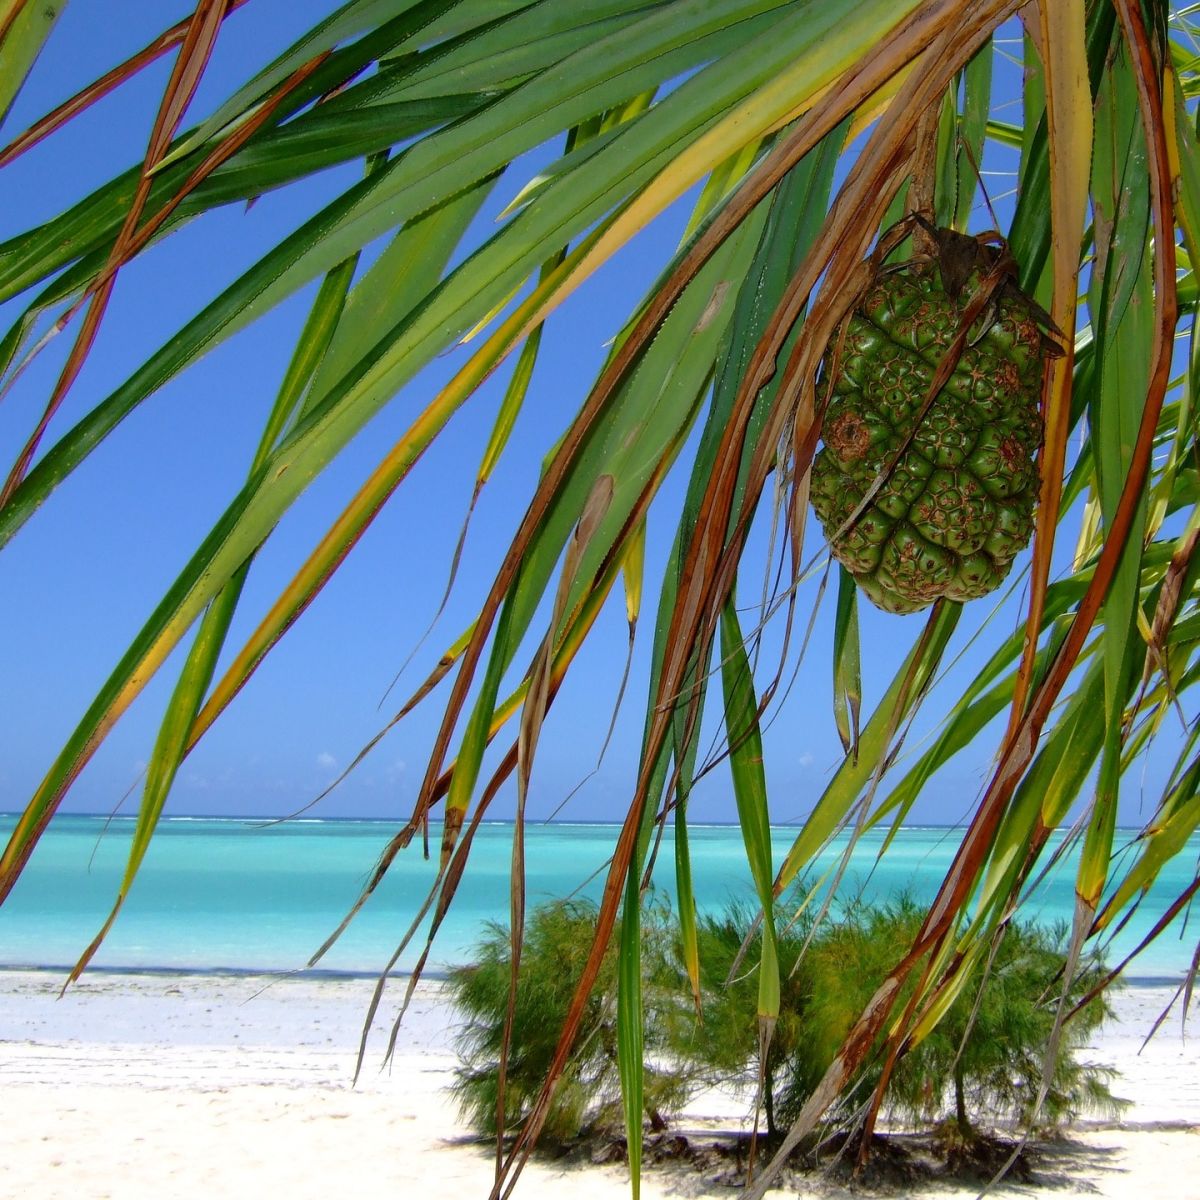 Pineapple and beach in Zanzibar, Tanzania